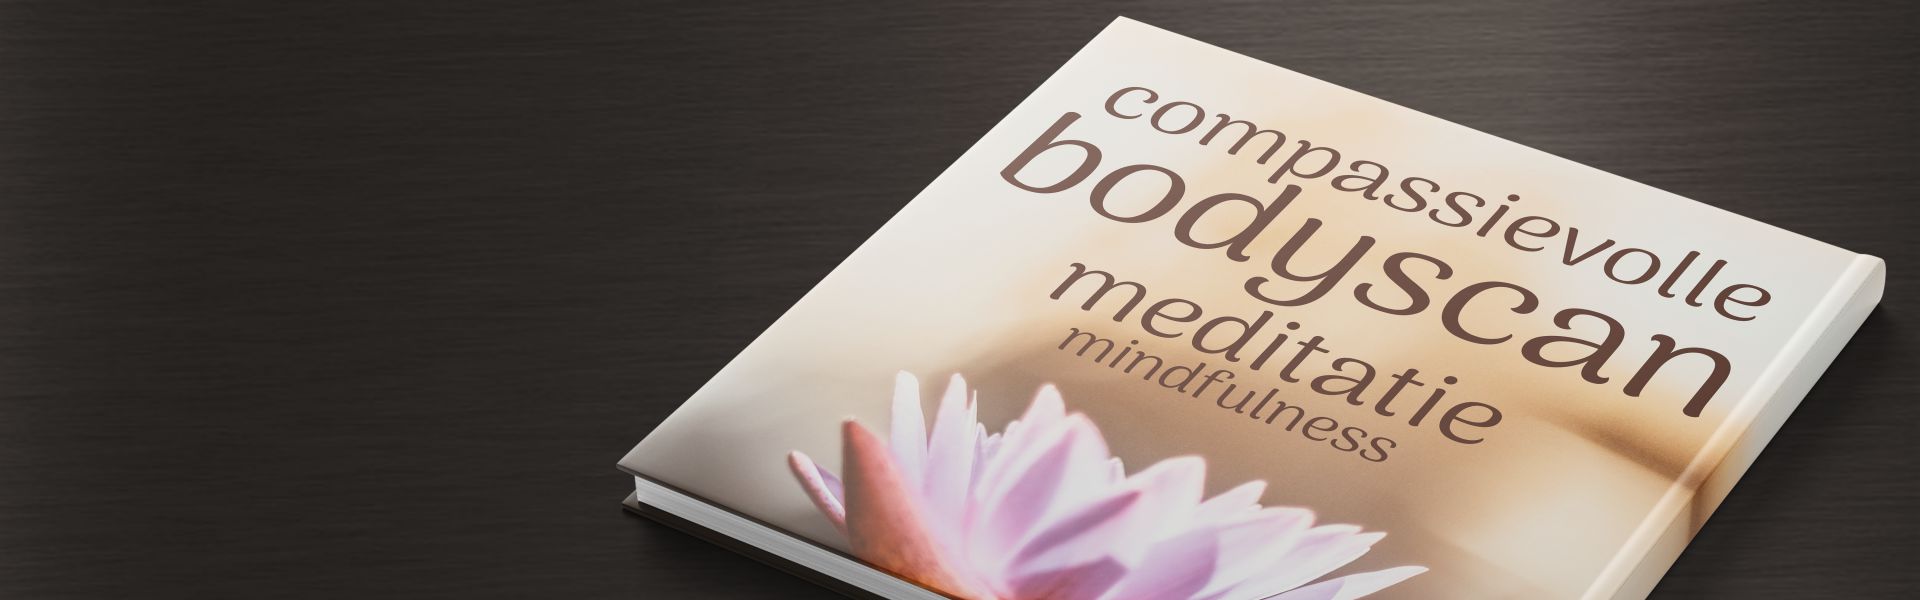 Compassievolle Bodyscan: Mindfulness Meditatie